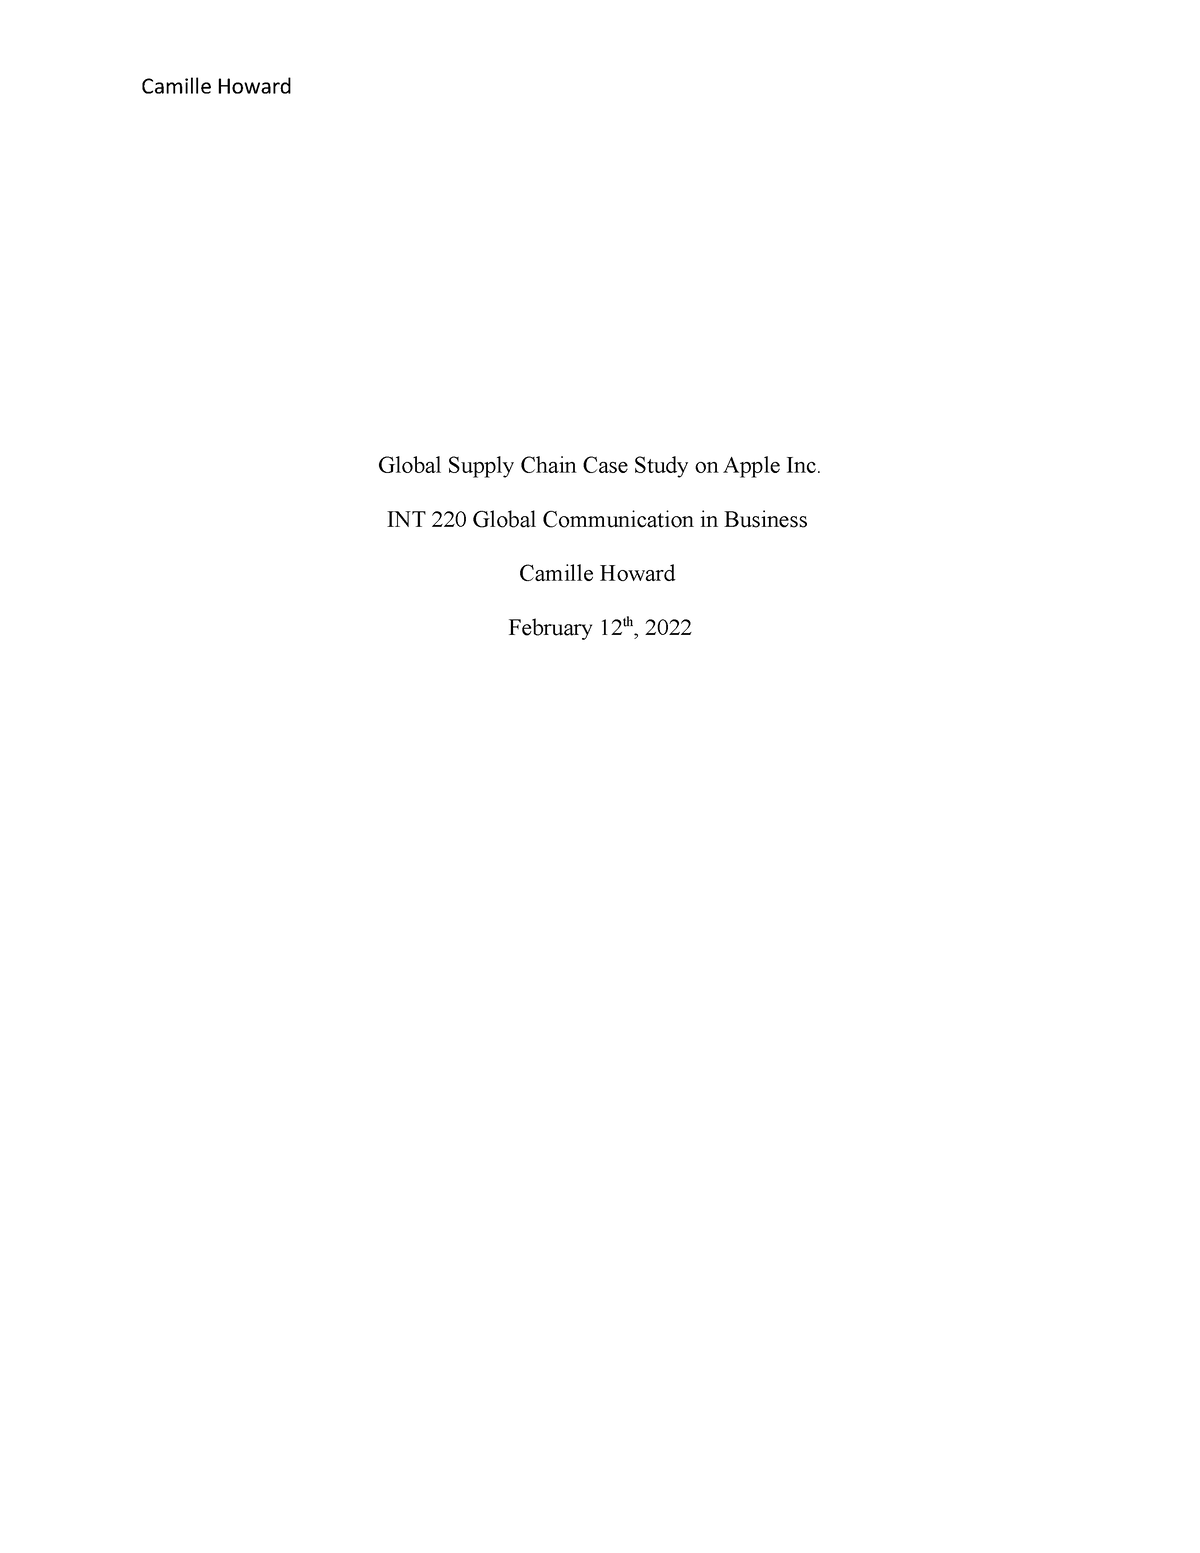 apple inc. managing a global supply chain case study pdf